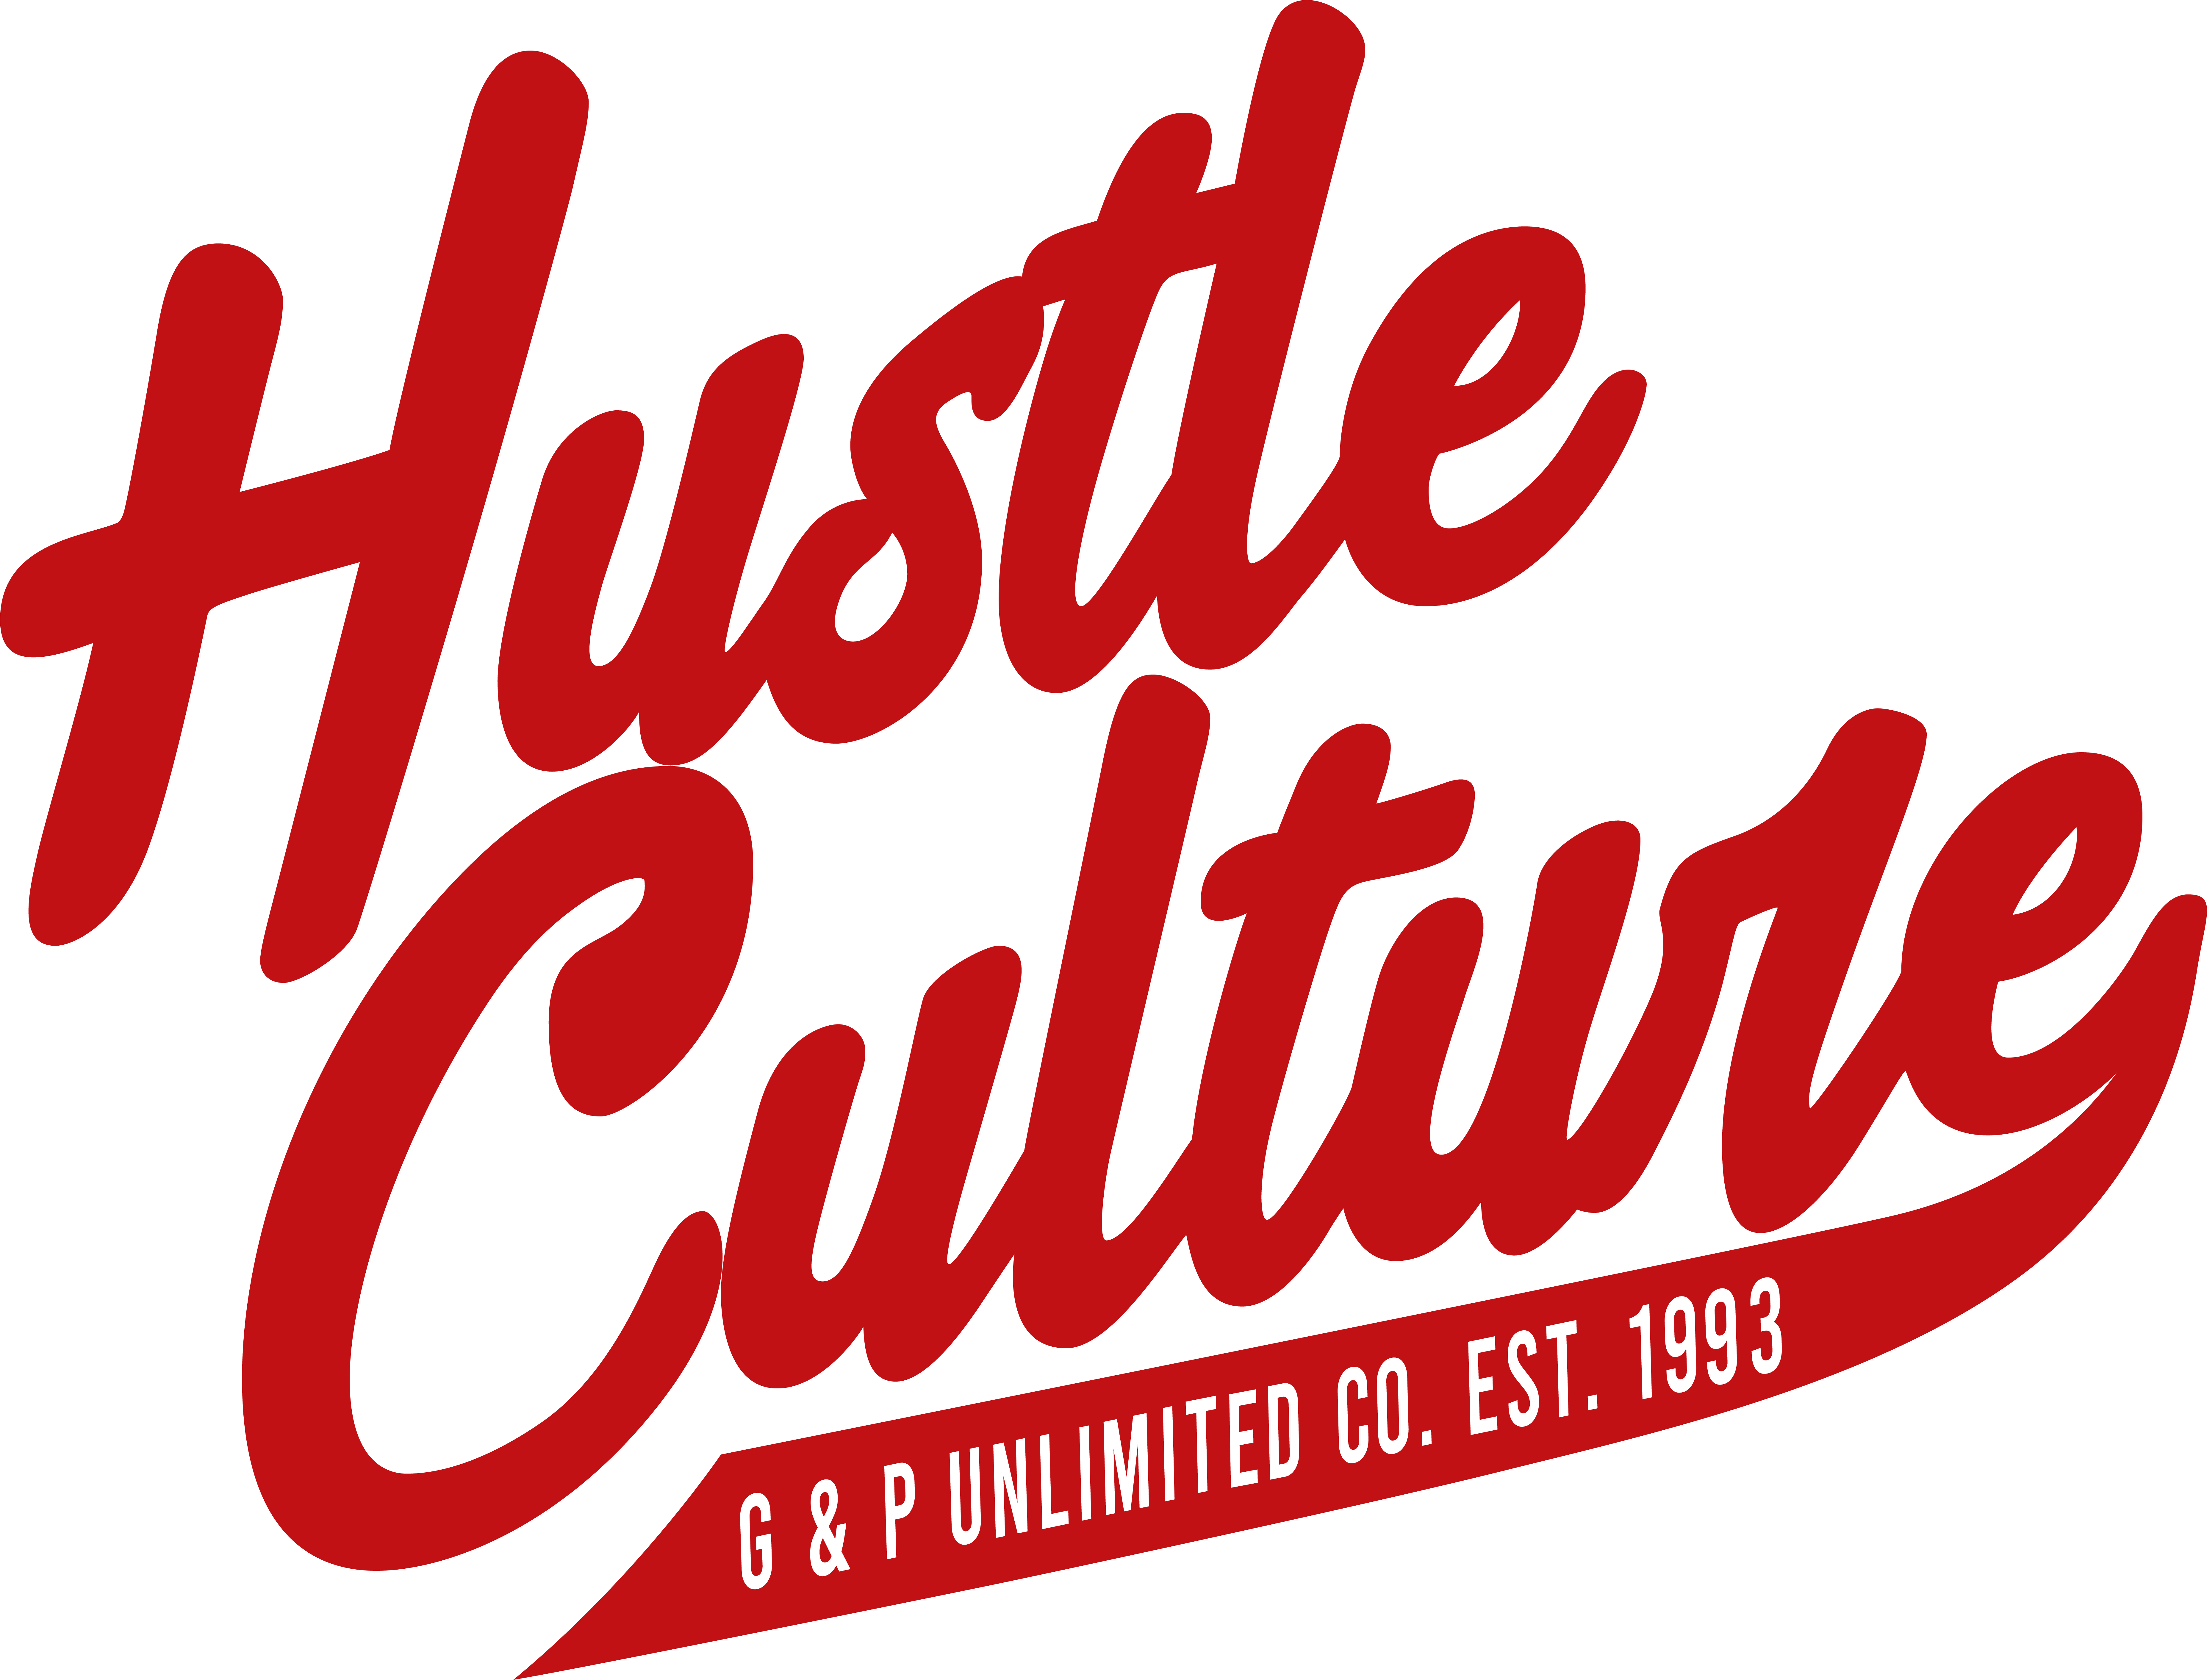 Hustle Mode Hoodie – Hustle & Cultivate